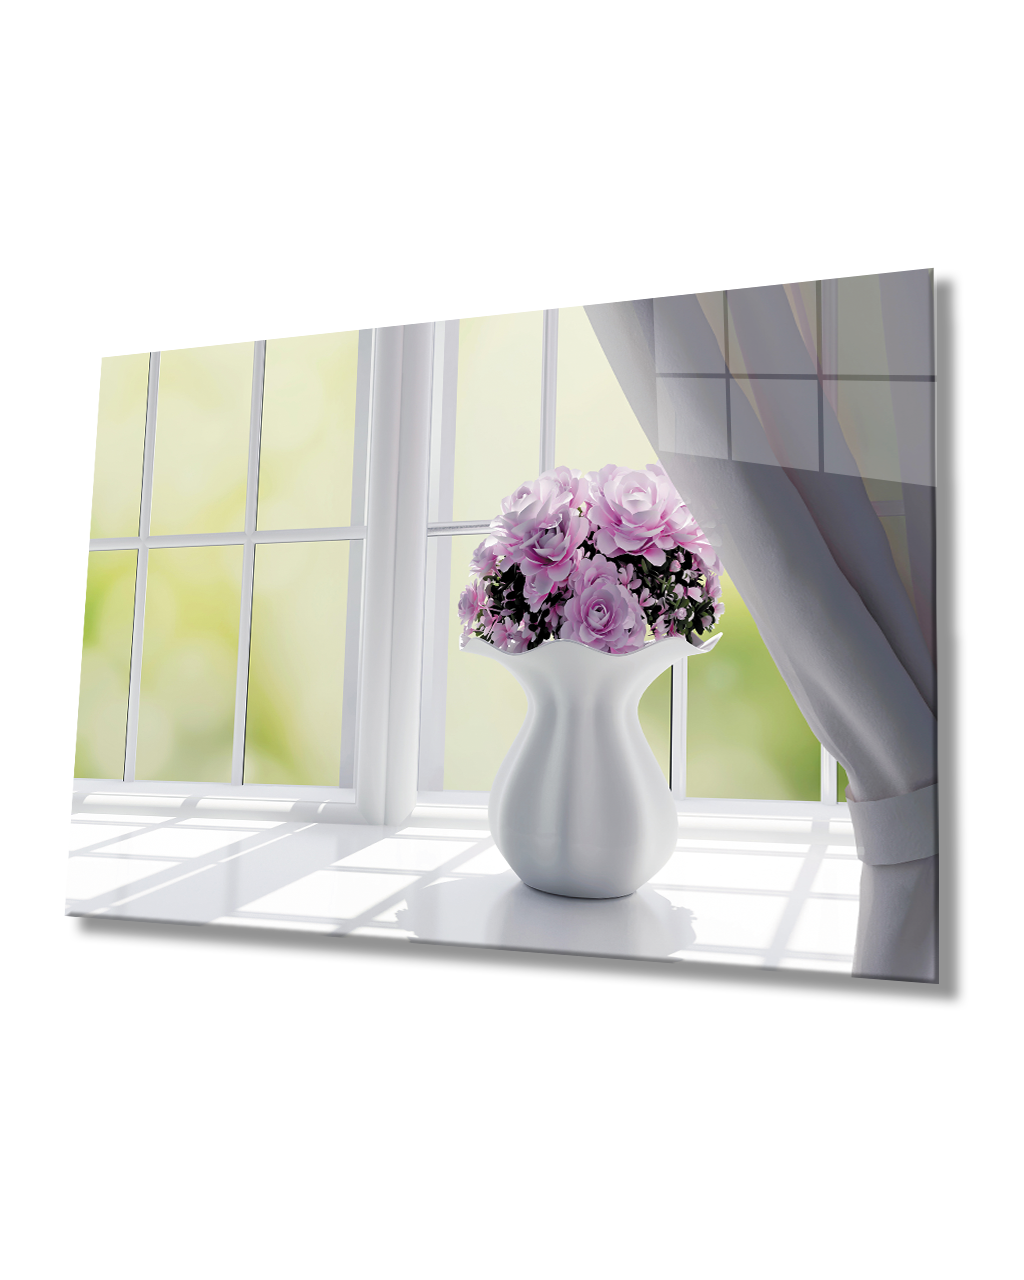 Beyaz Vazoda Pembe Güller Cam Tablo  4mm Dayanıklı Temperli Cam Pink Roses In White Vase Glass Table 4mm Durable Tempered Glass